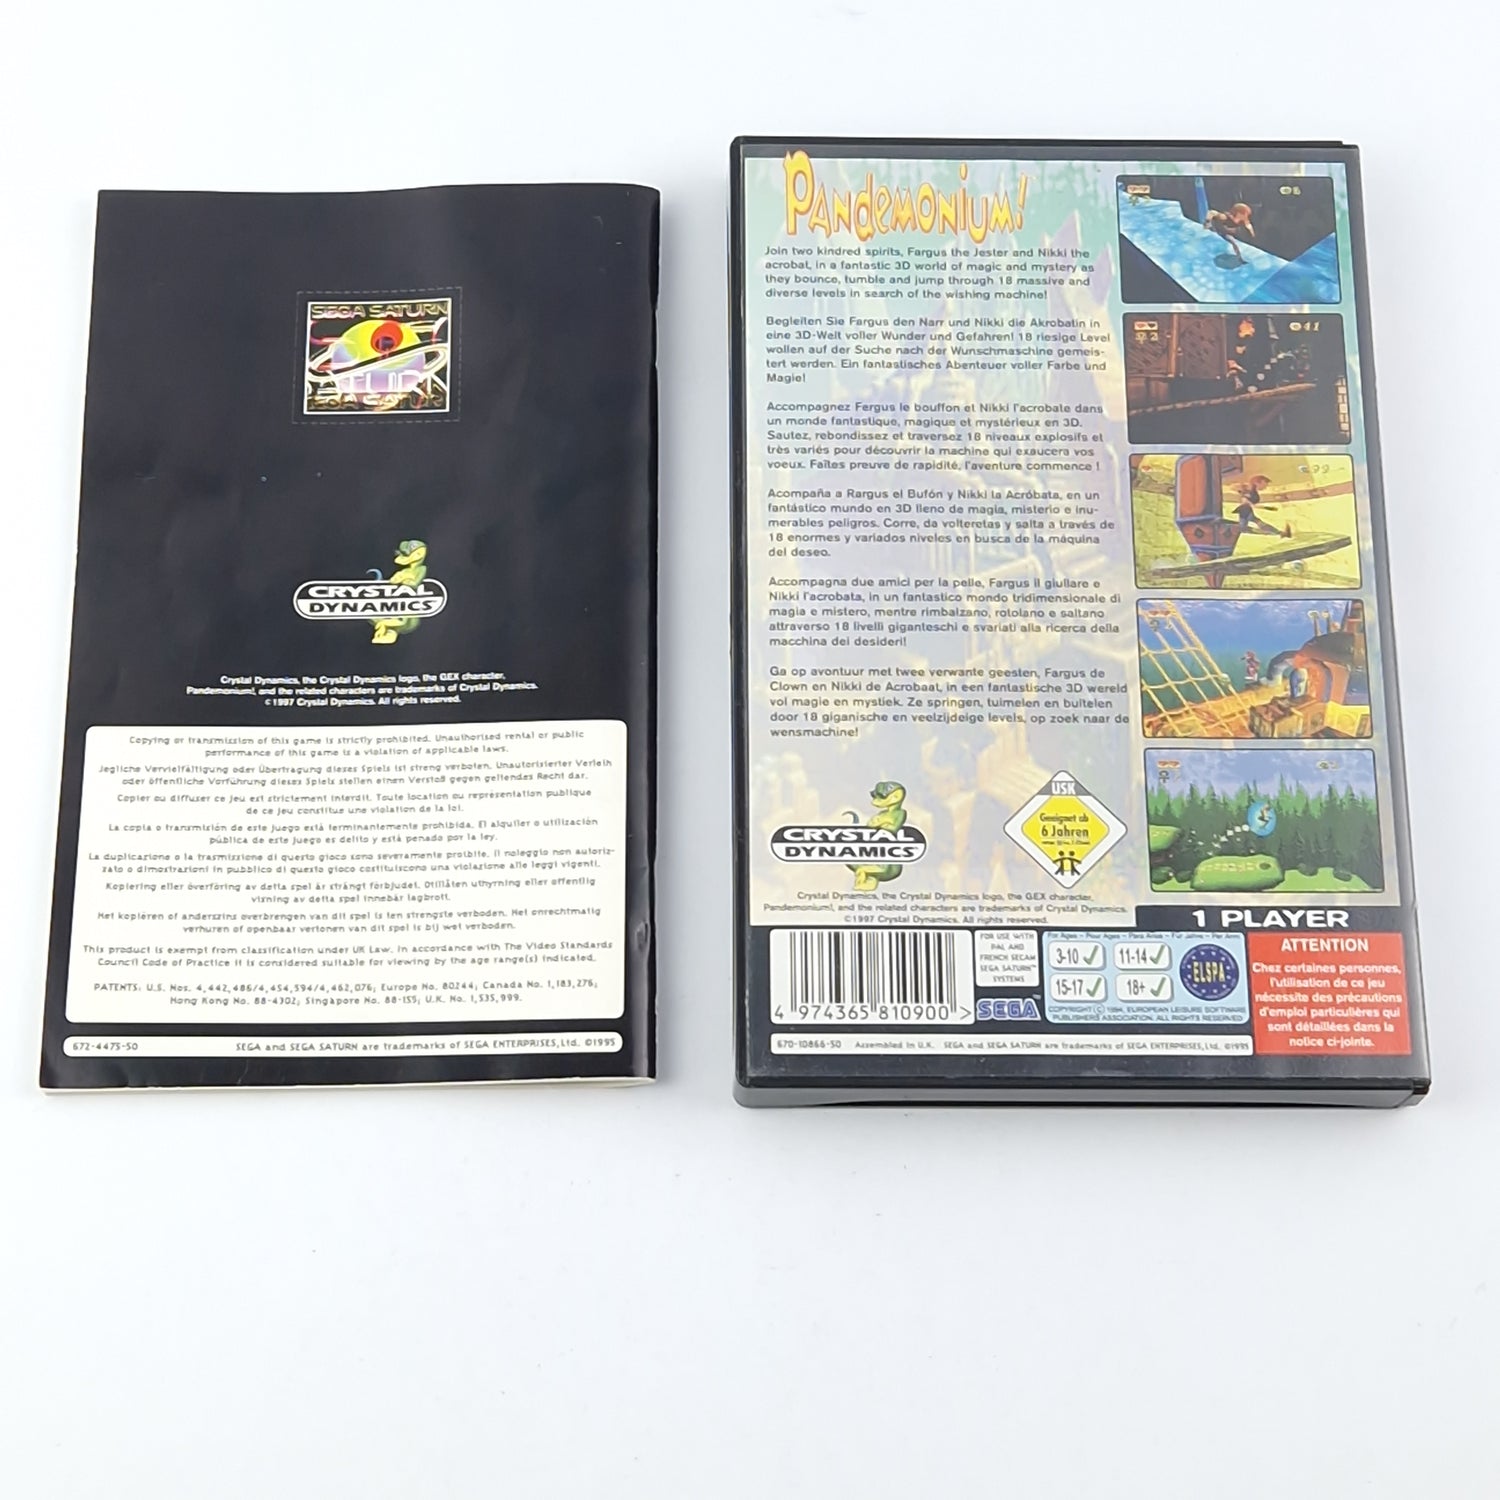 Sega Saturn Spiel : Pandemonium! - OVP Anleitung PAL Disk / PAL